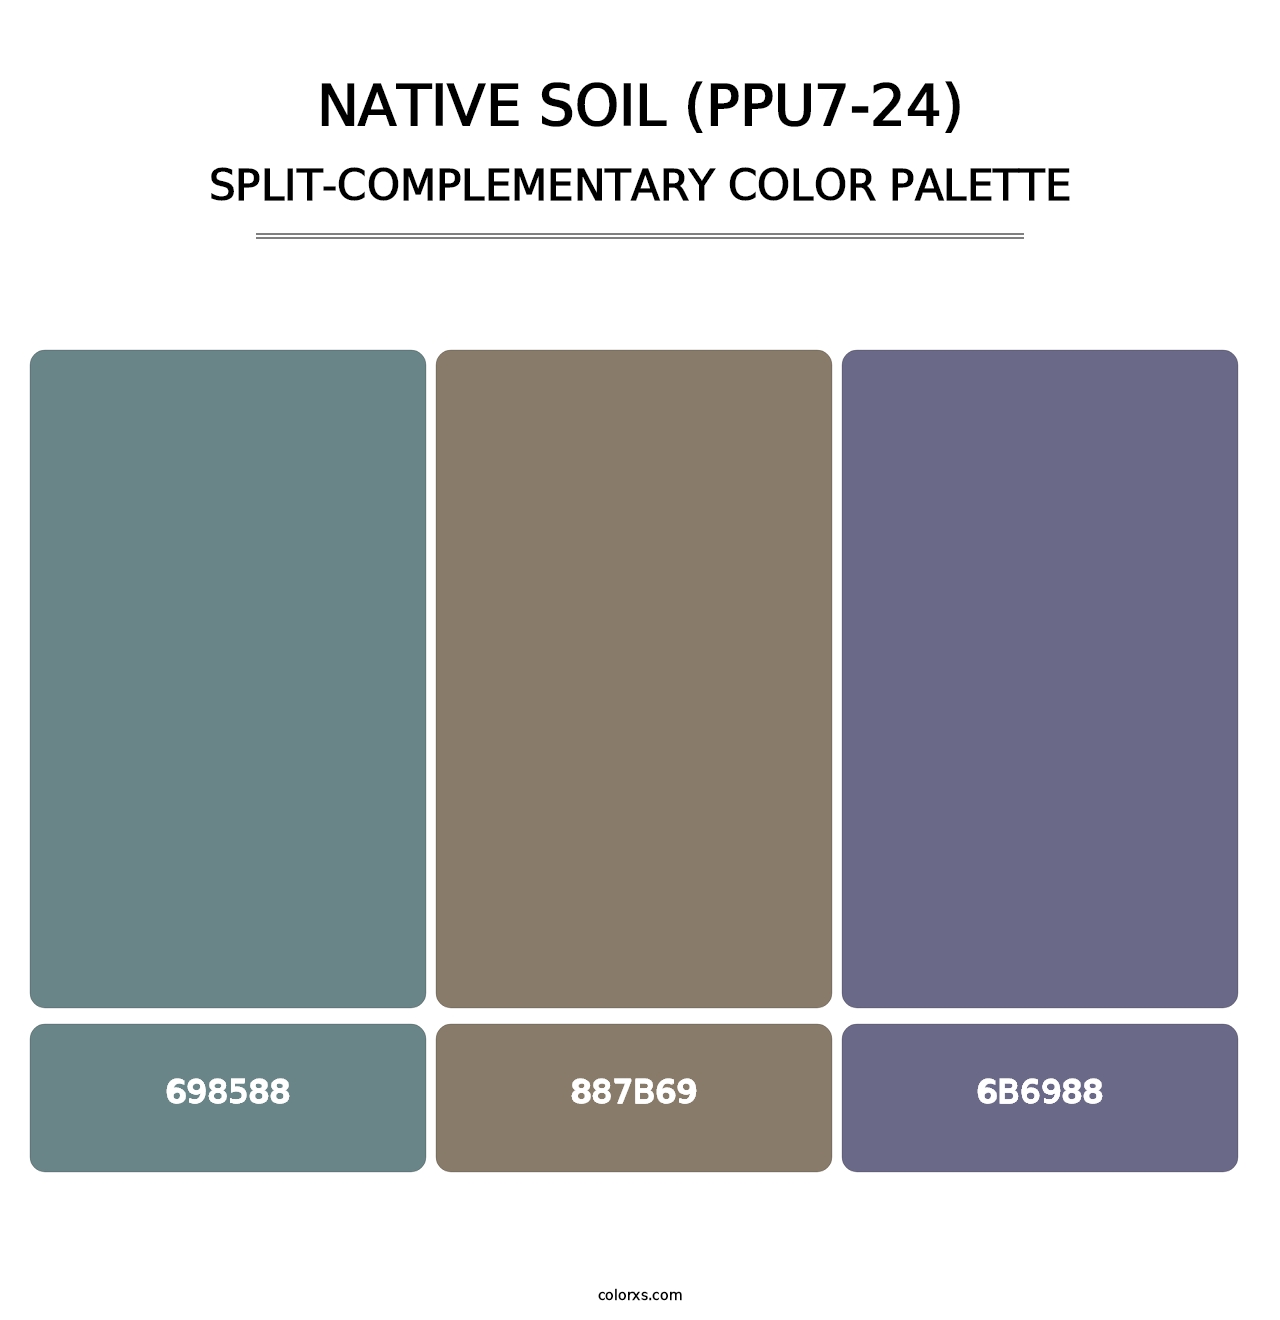 Native Soil (PPU7-24) - Split-Complementary Color Palette